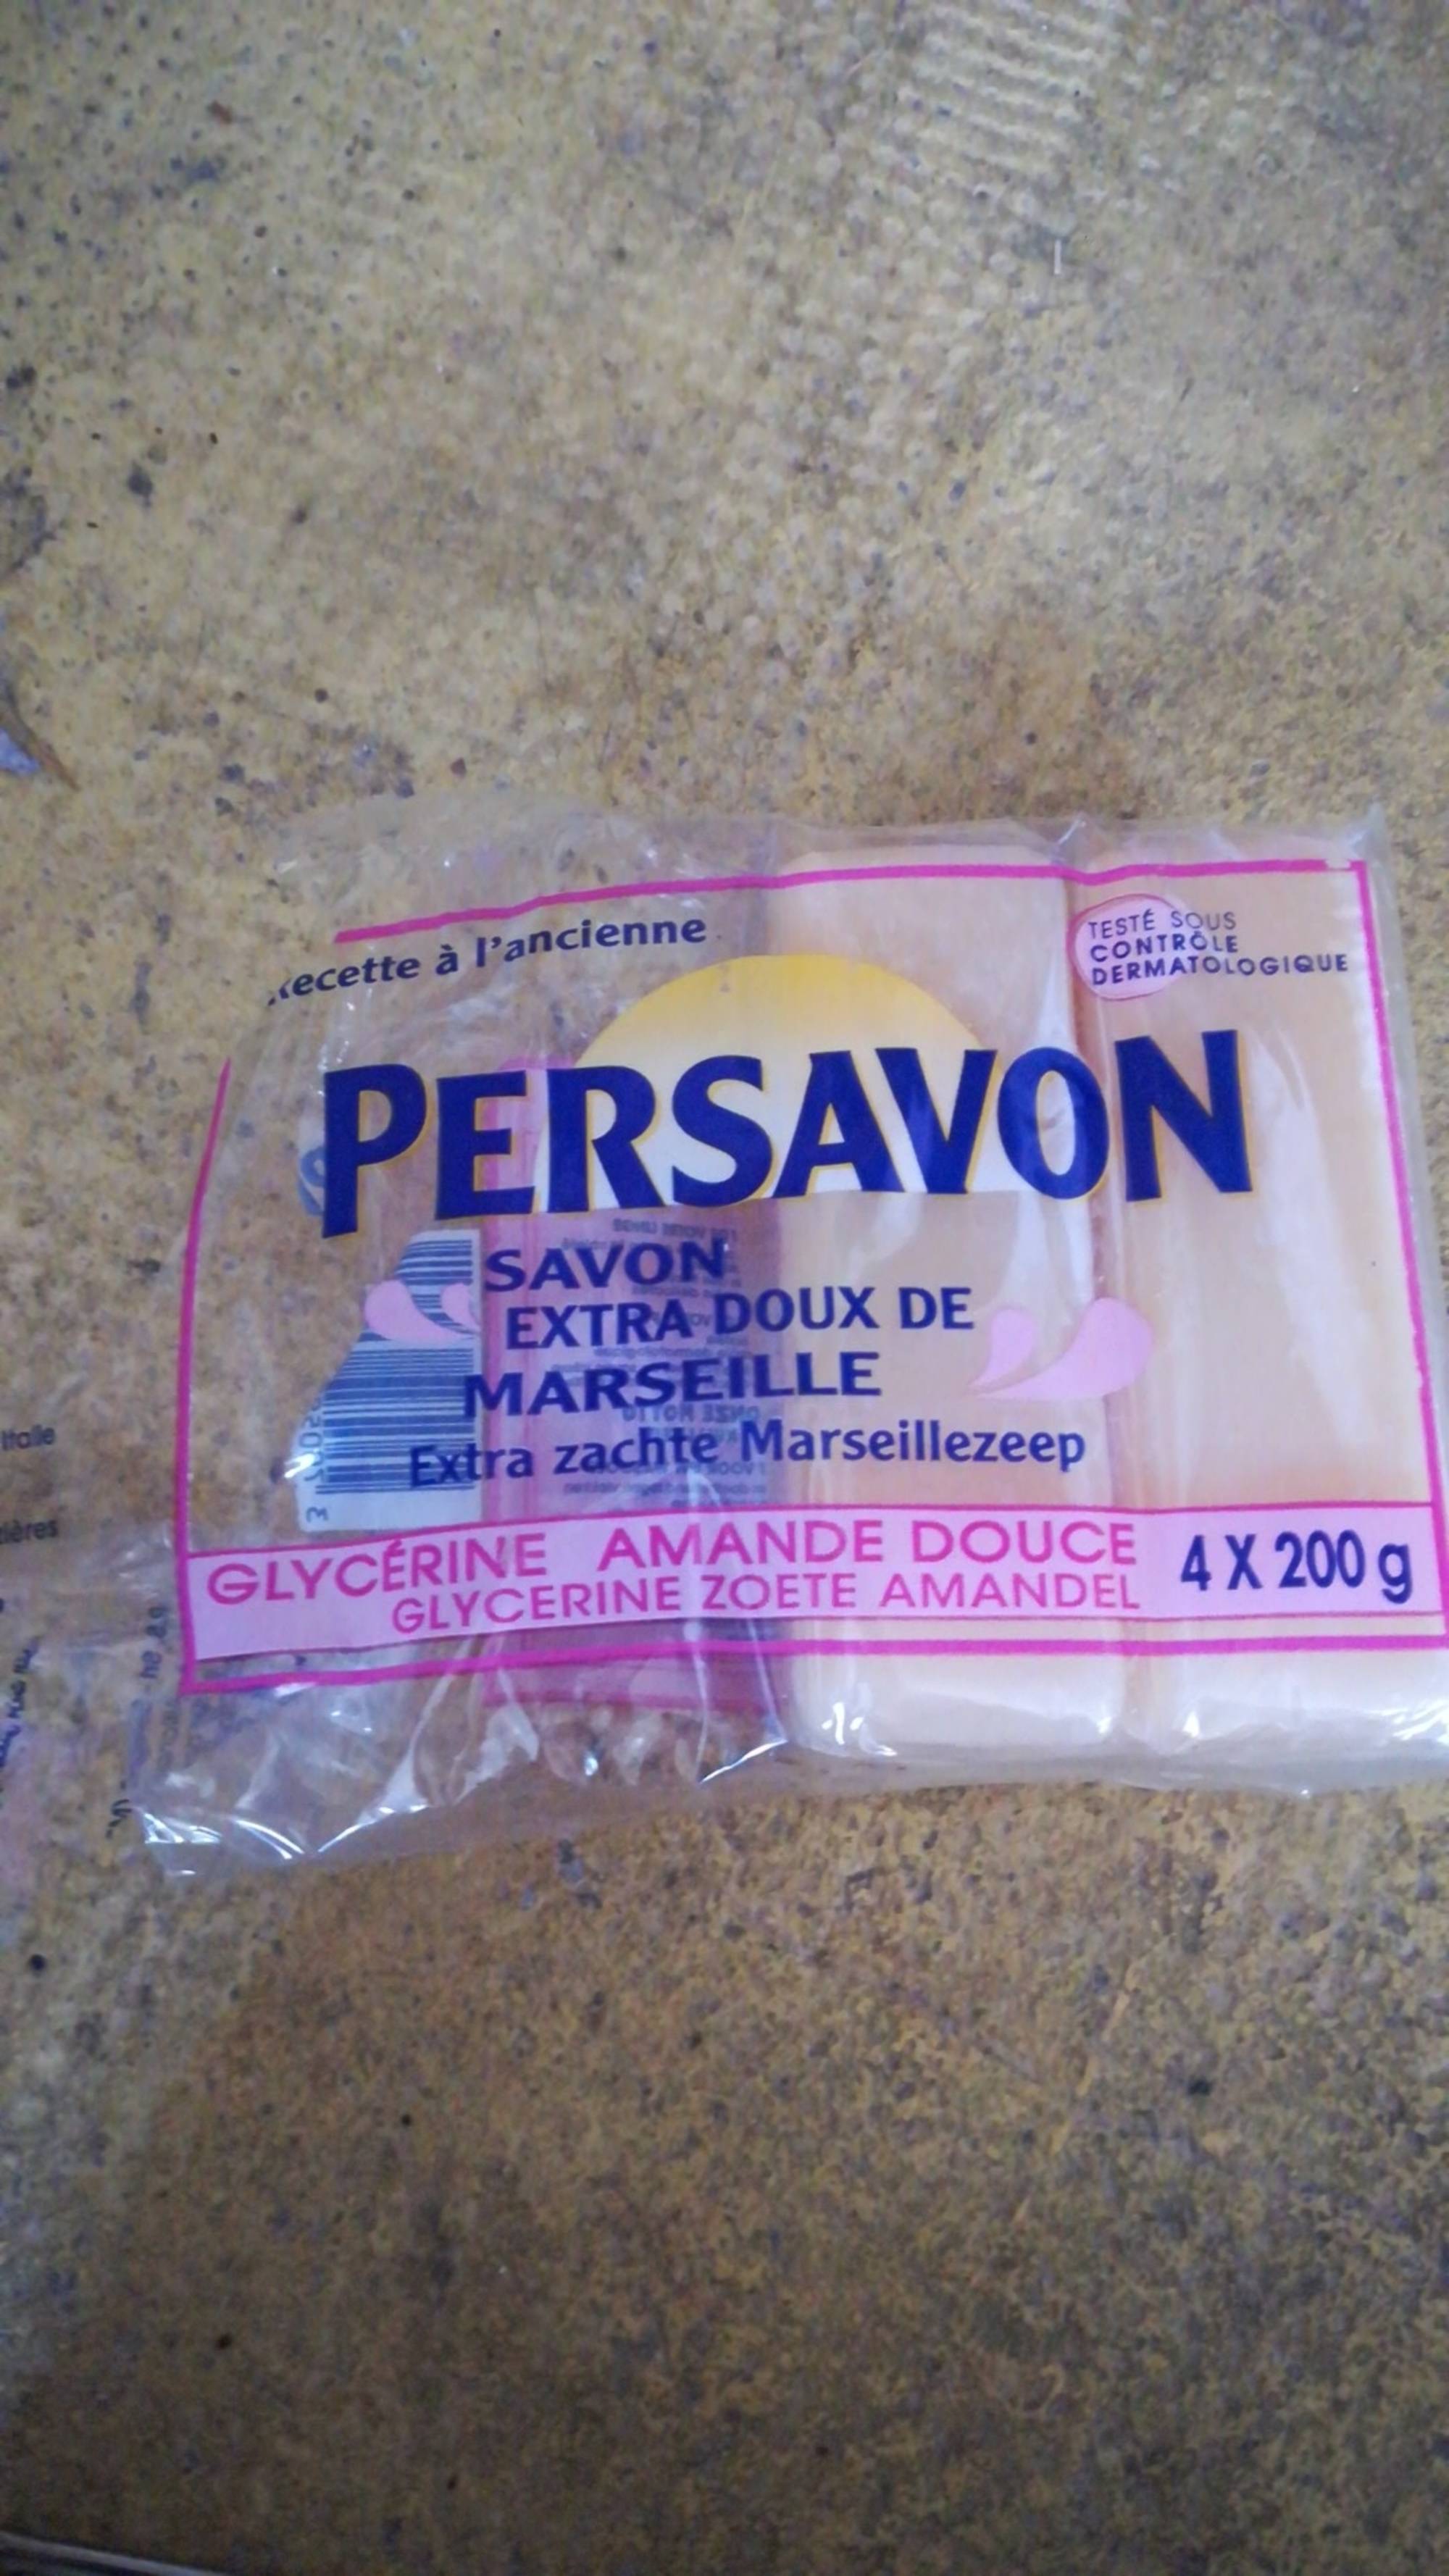 PERSAVON - Savon extra doux de Marseille - Glycérine Amande douce